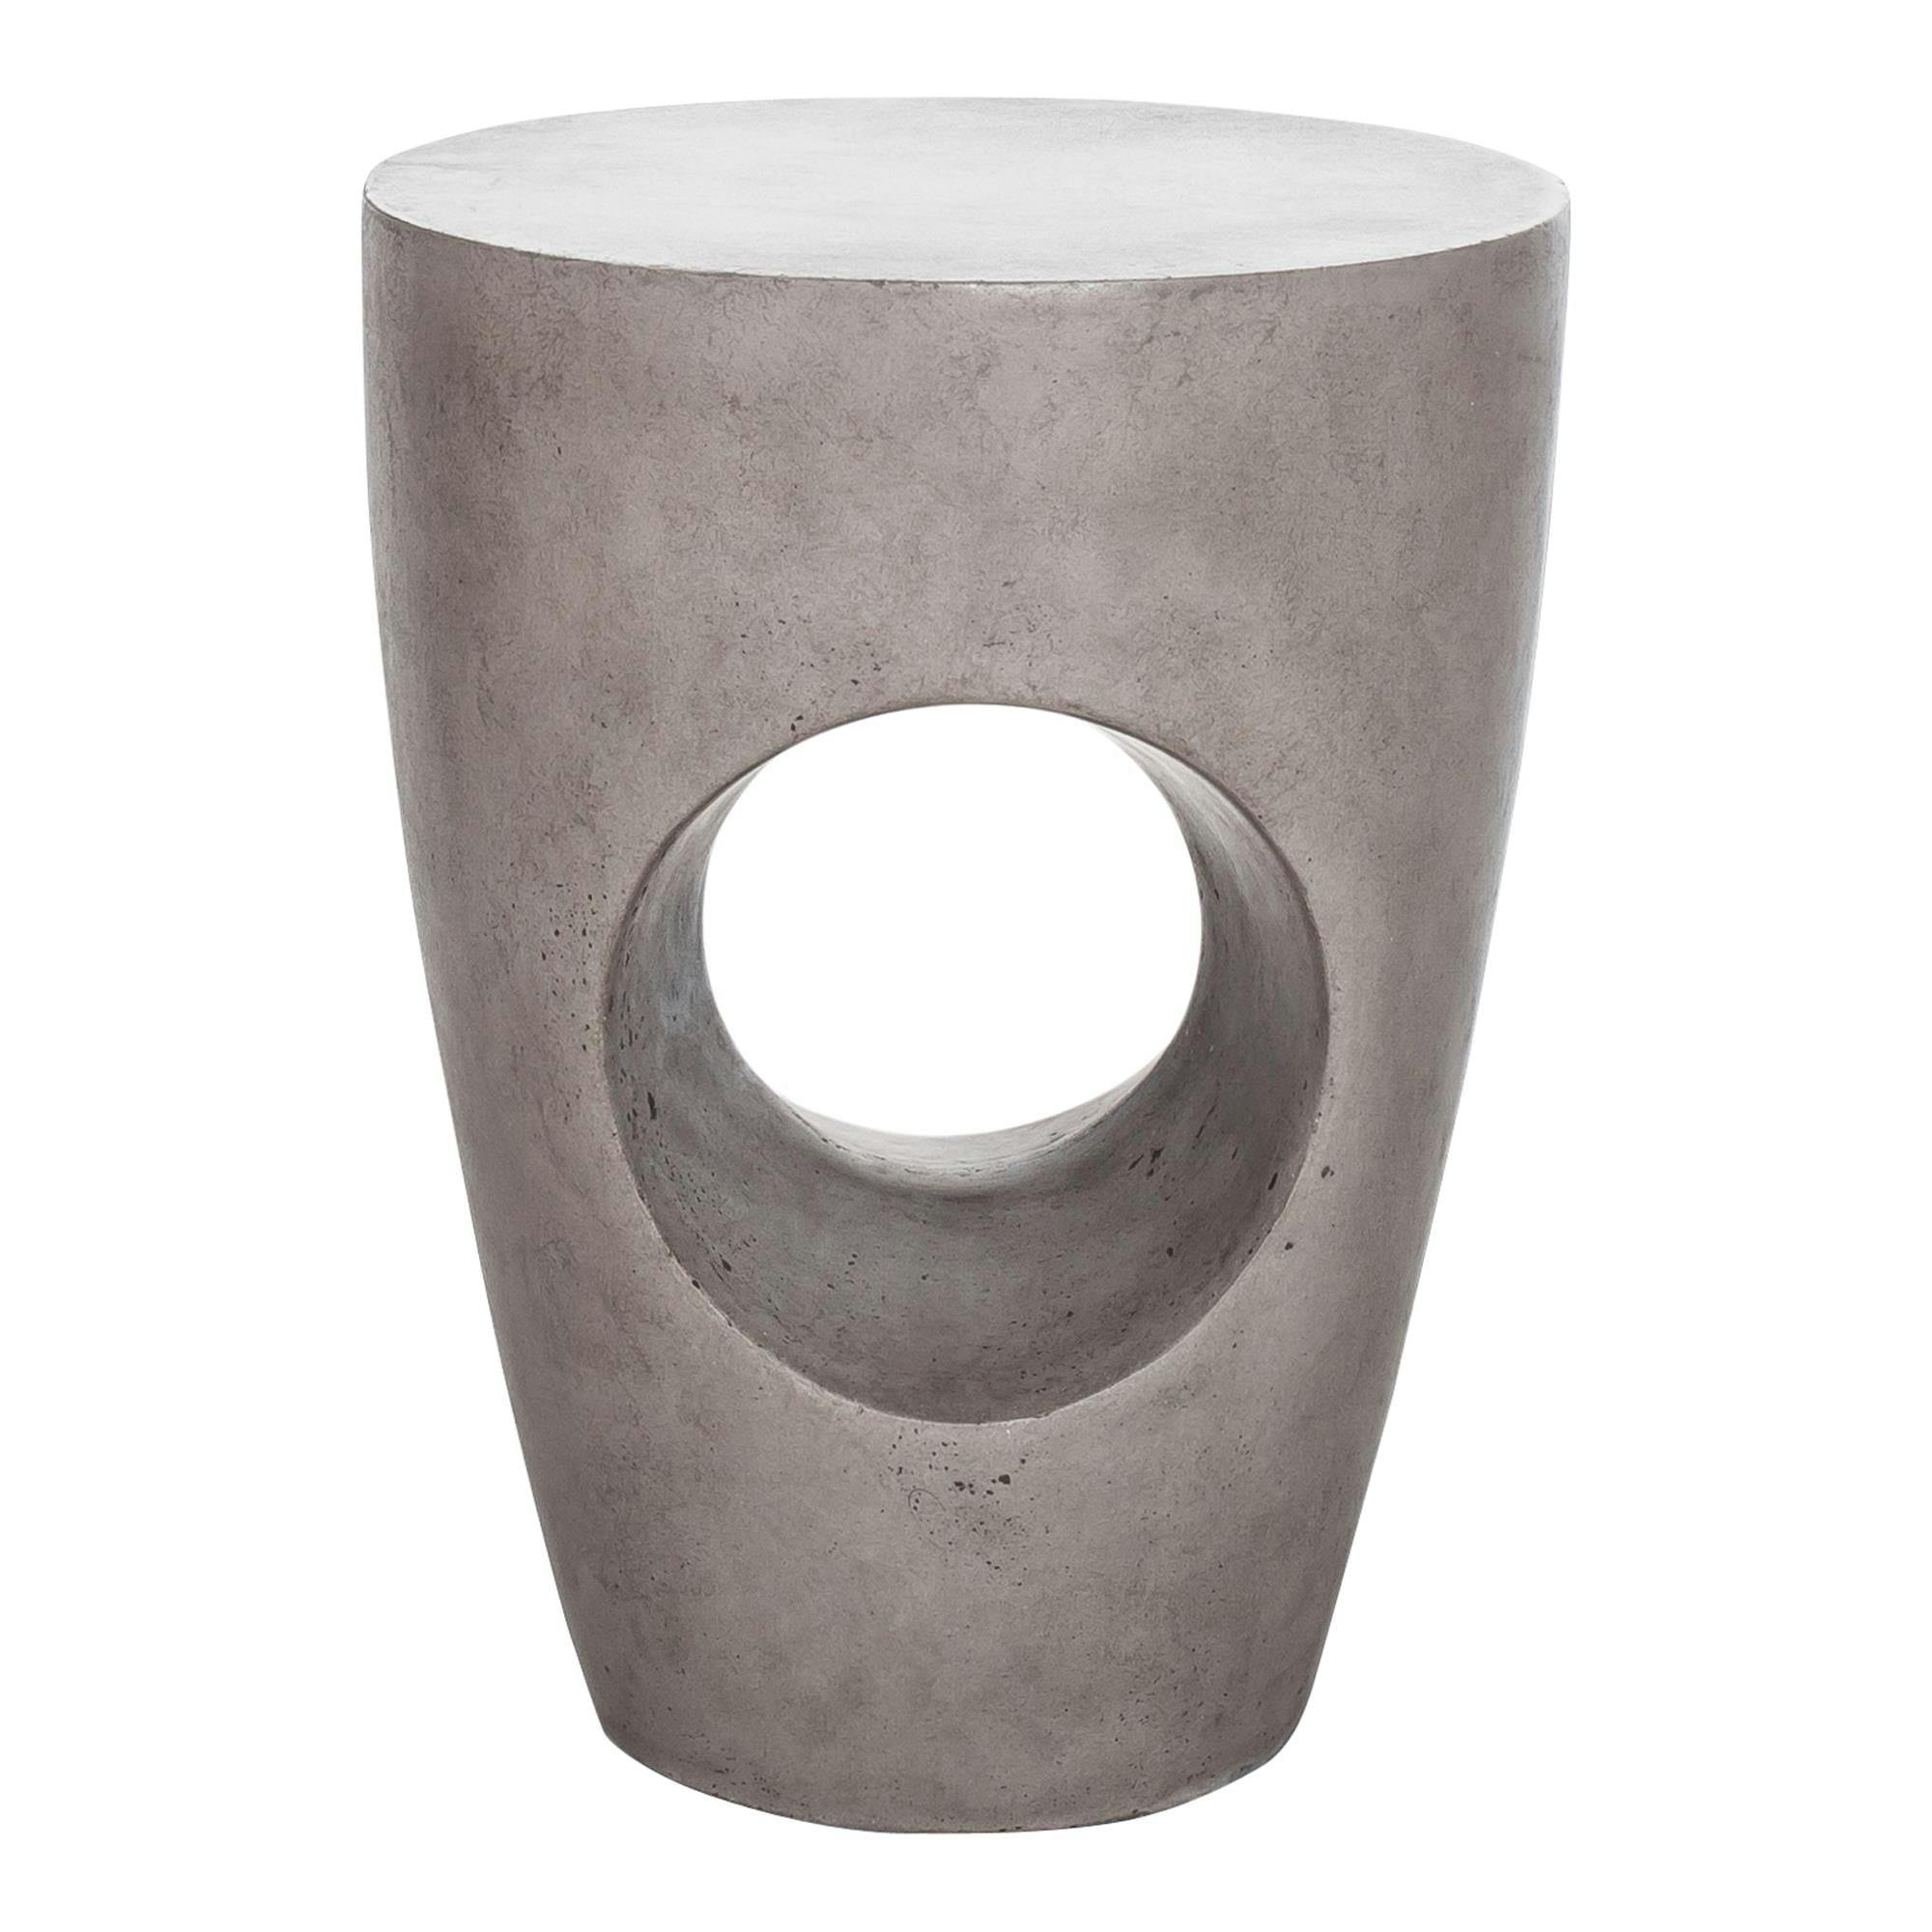 Katelle Grey Concrete Round Indoor/Outdoor Stool